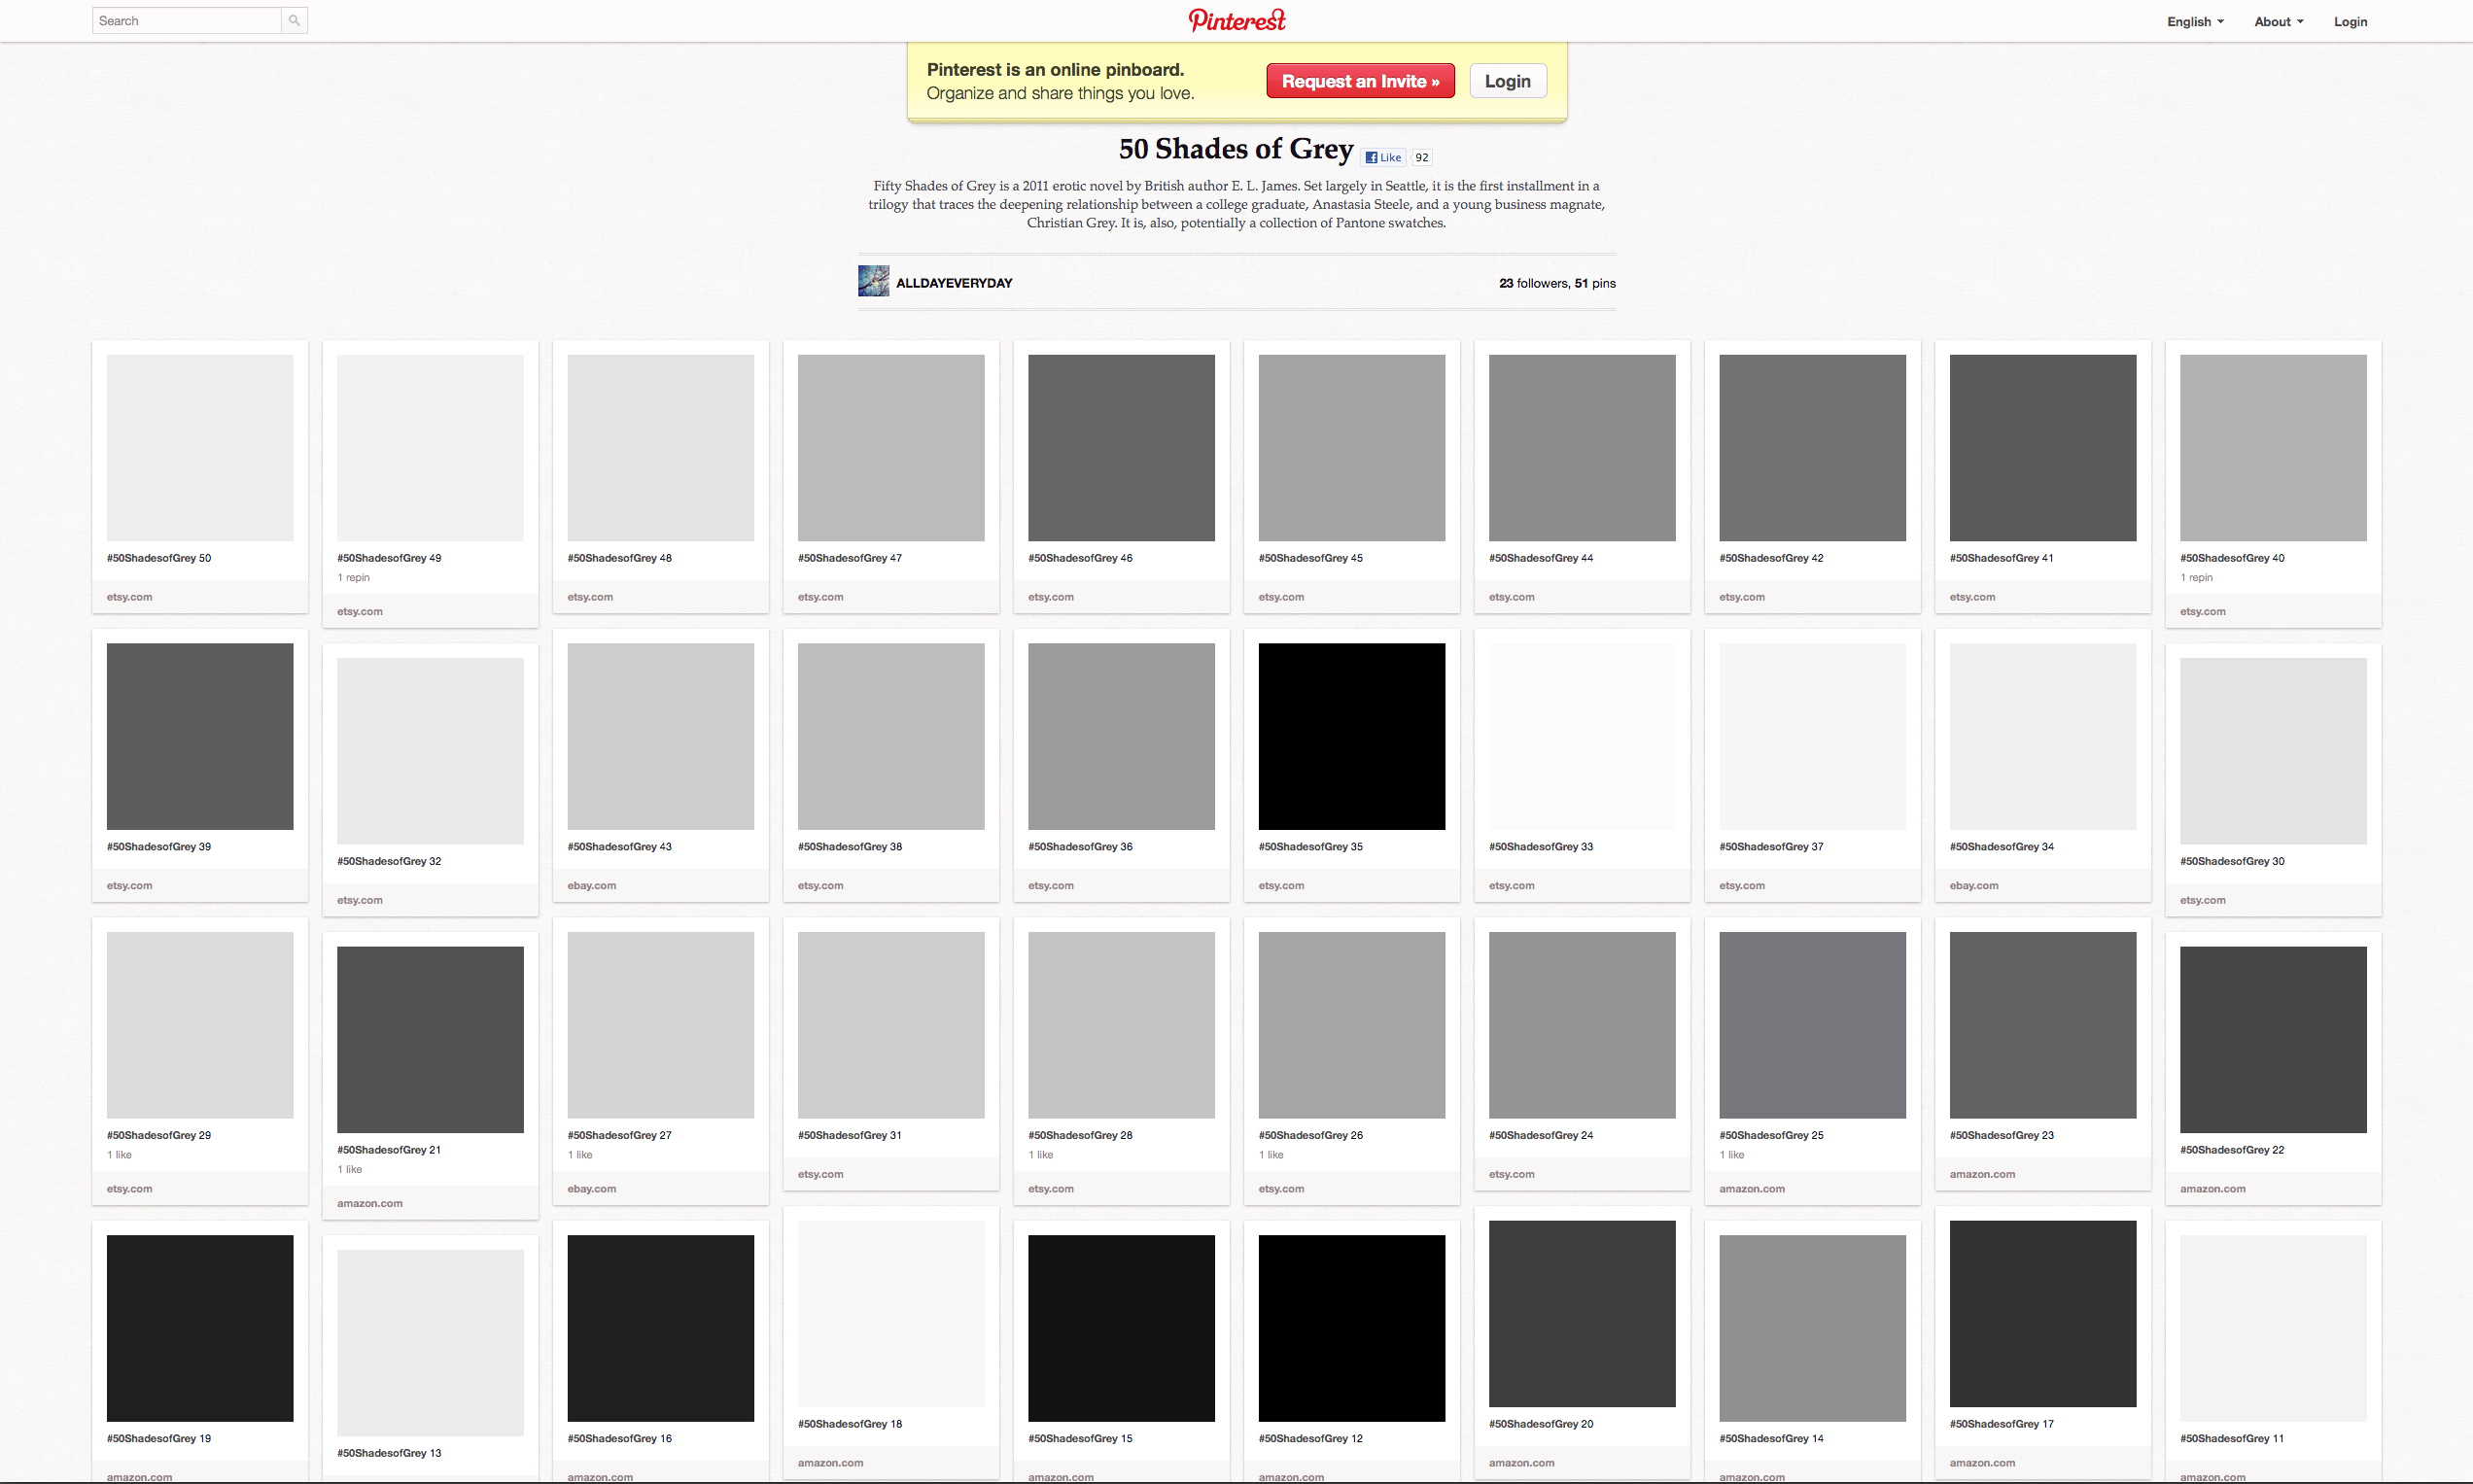 Pinterest: 50 Shades of Grey - Print (image) - Creativity Online